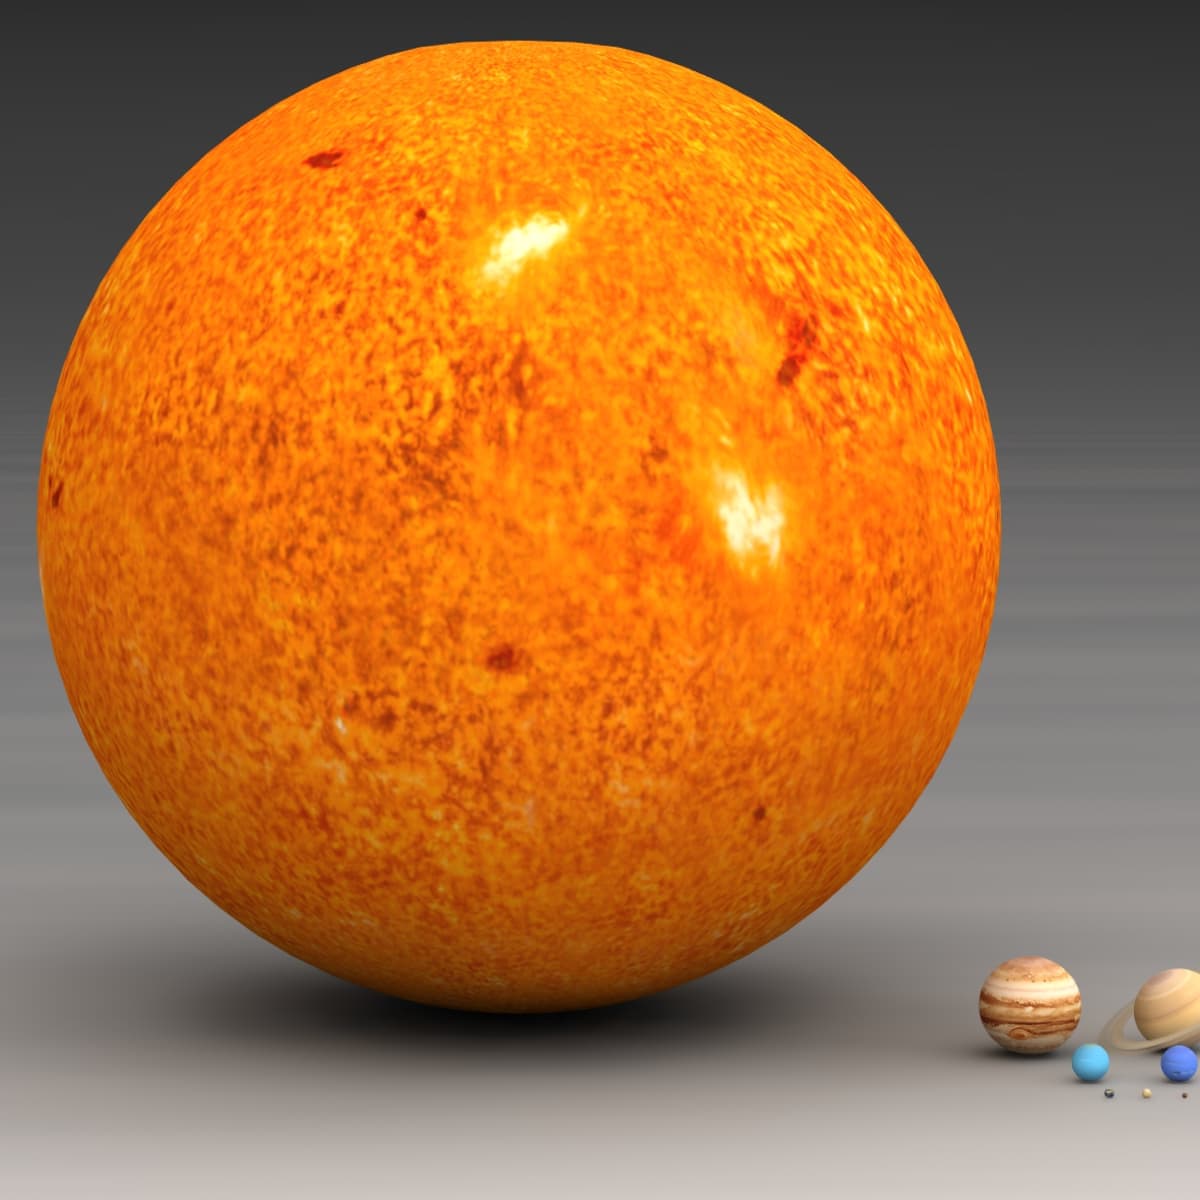 planets bigger than the sun